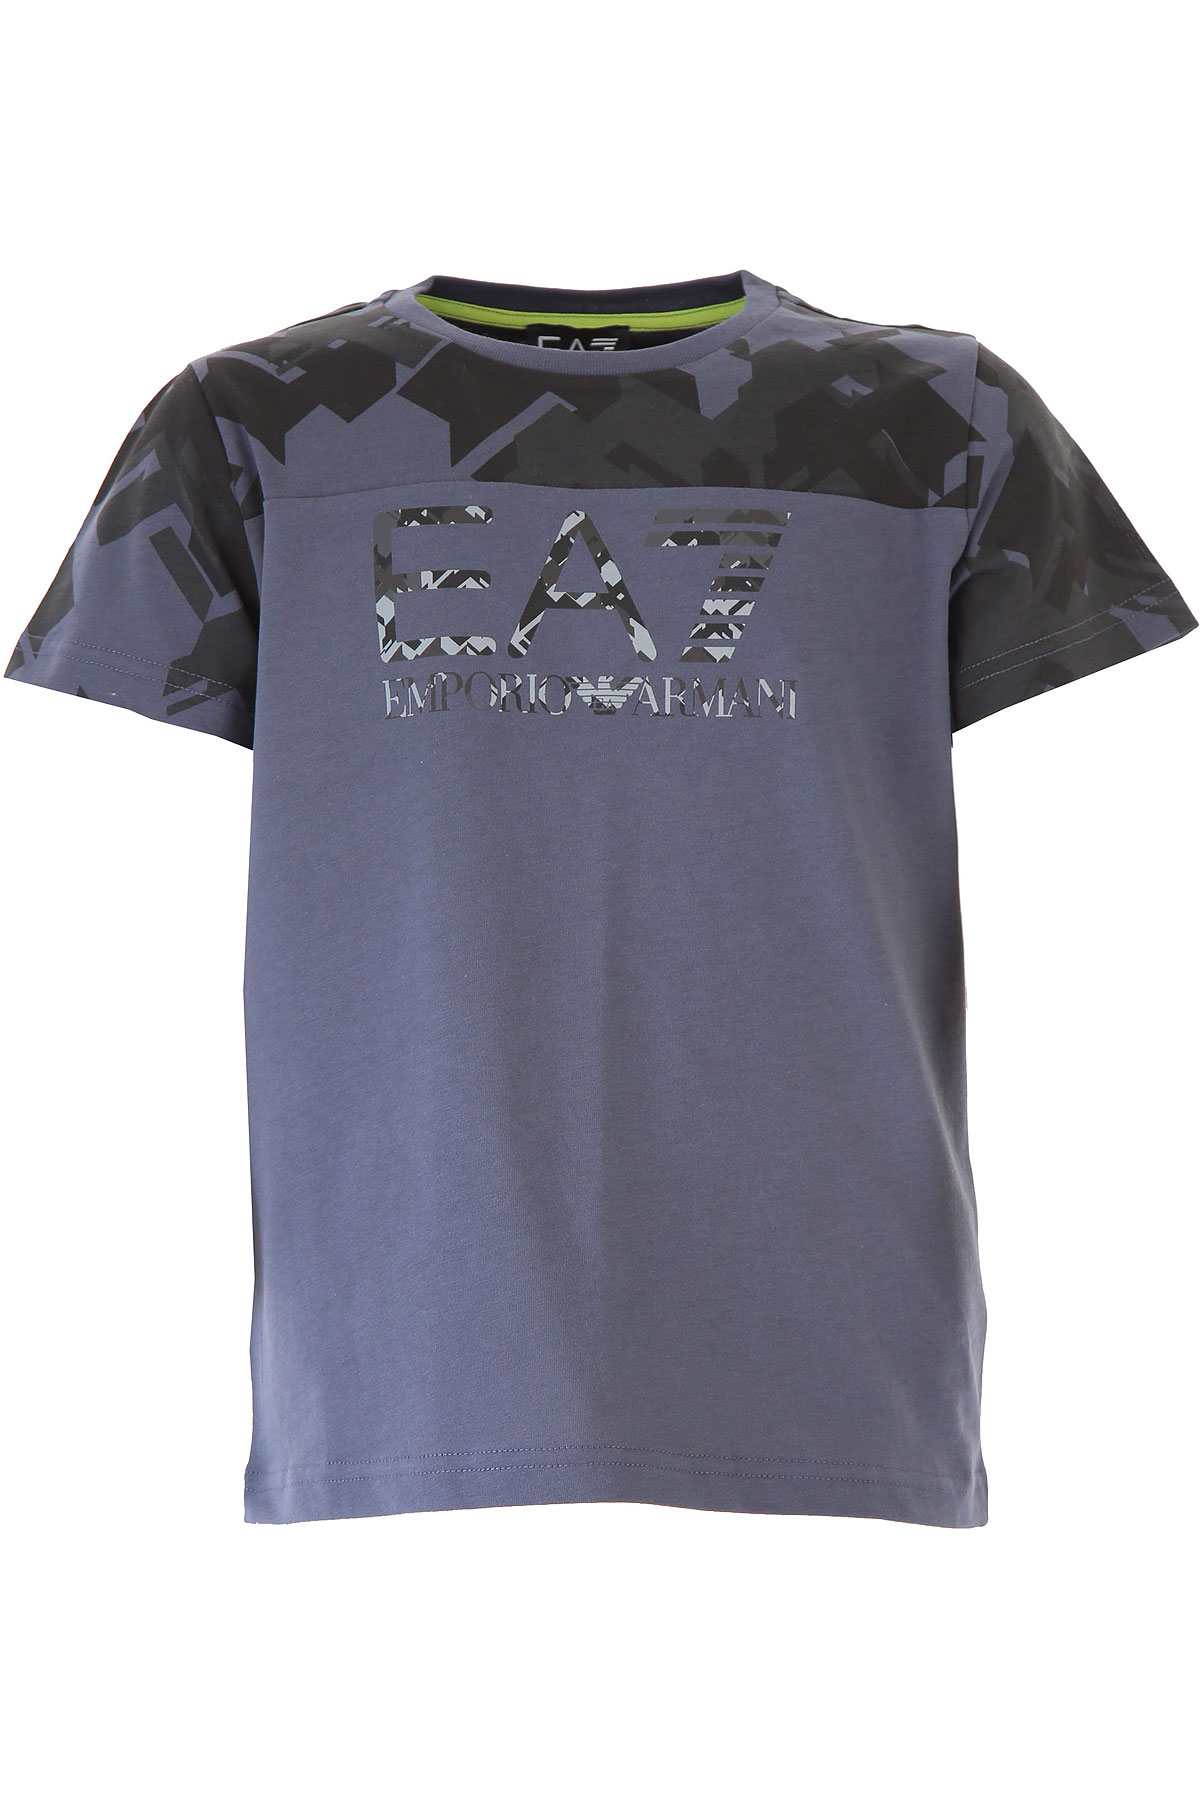 Emporio Armani Kinder T-Shirt für Jungen Günstig im Sale, Dunkelblau, Baumwolle, 2017, 10Y 12Y 14Y 4Y 6Y